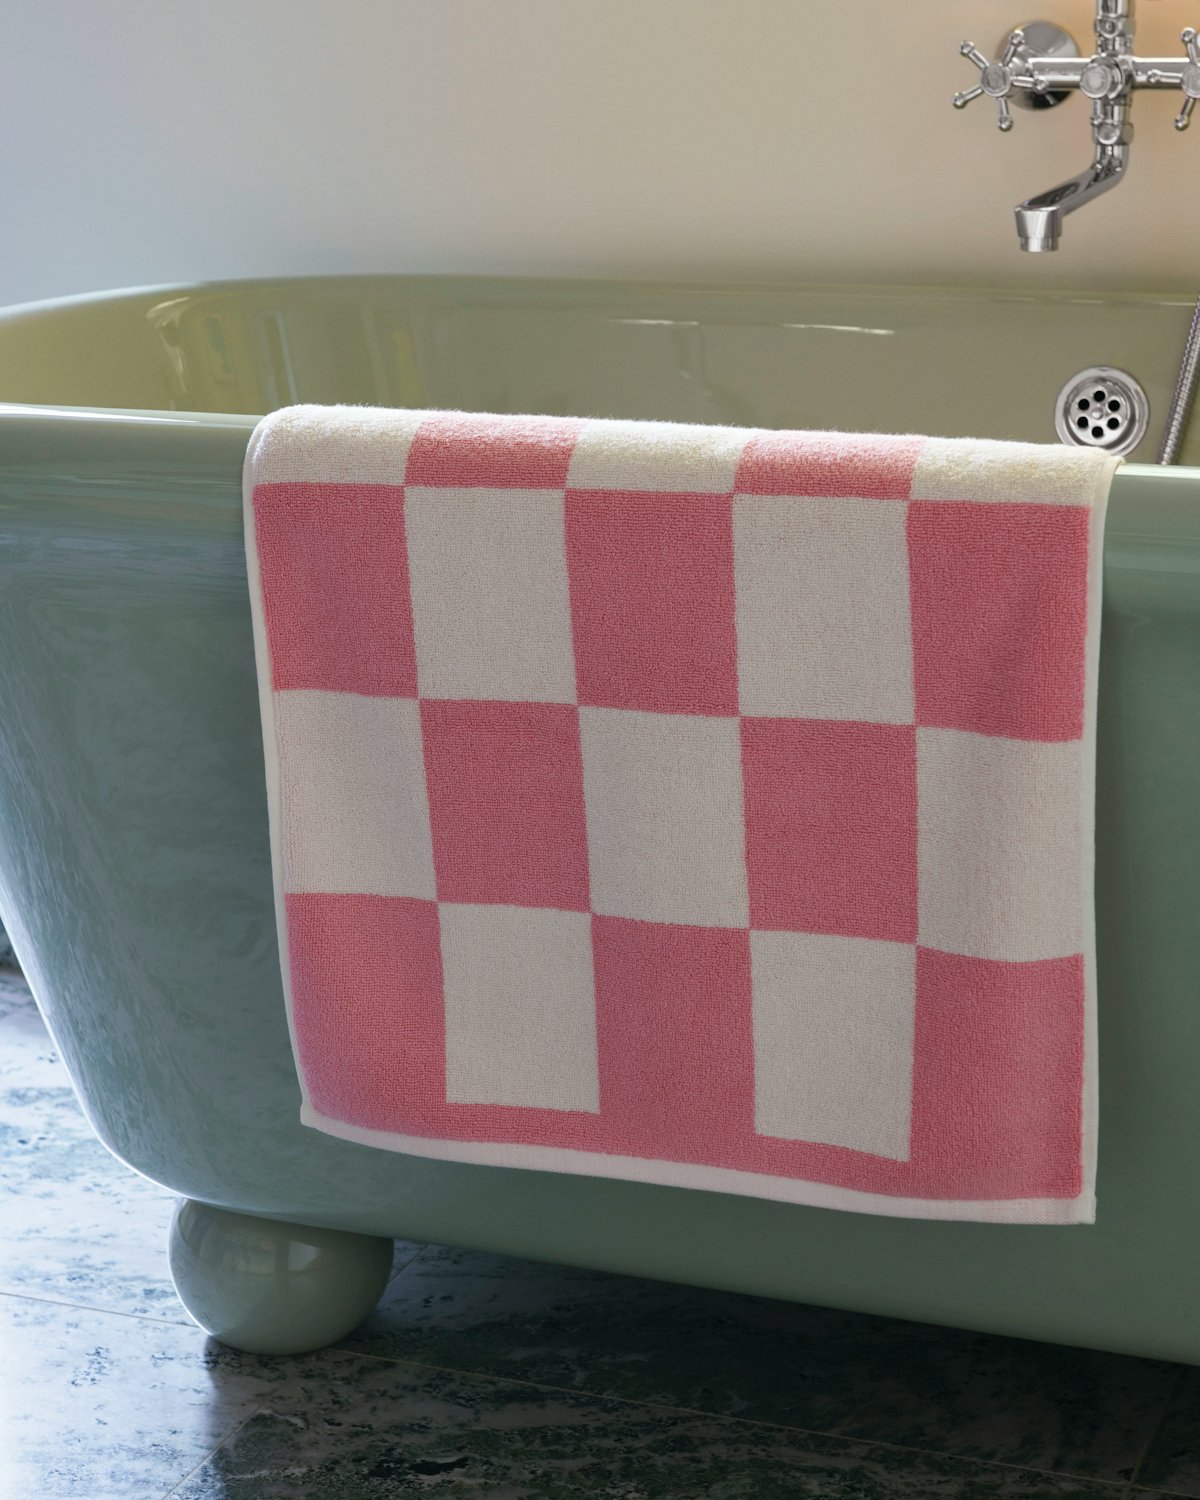 Hay Check Bath Towel in Matcha